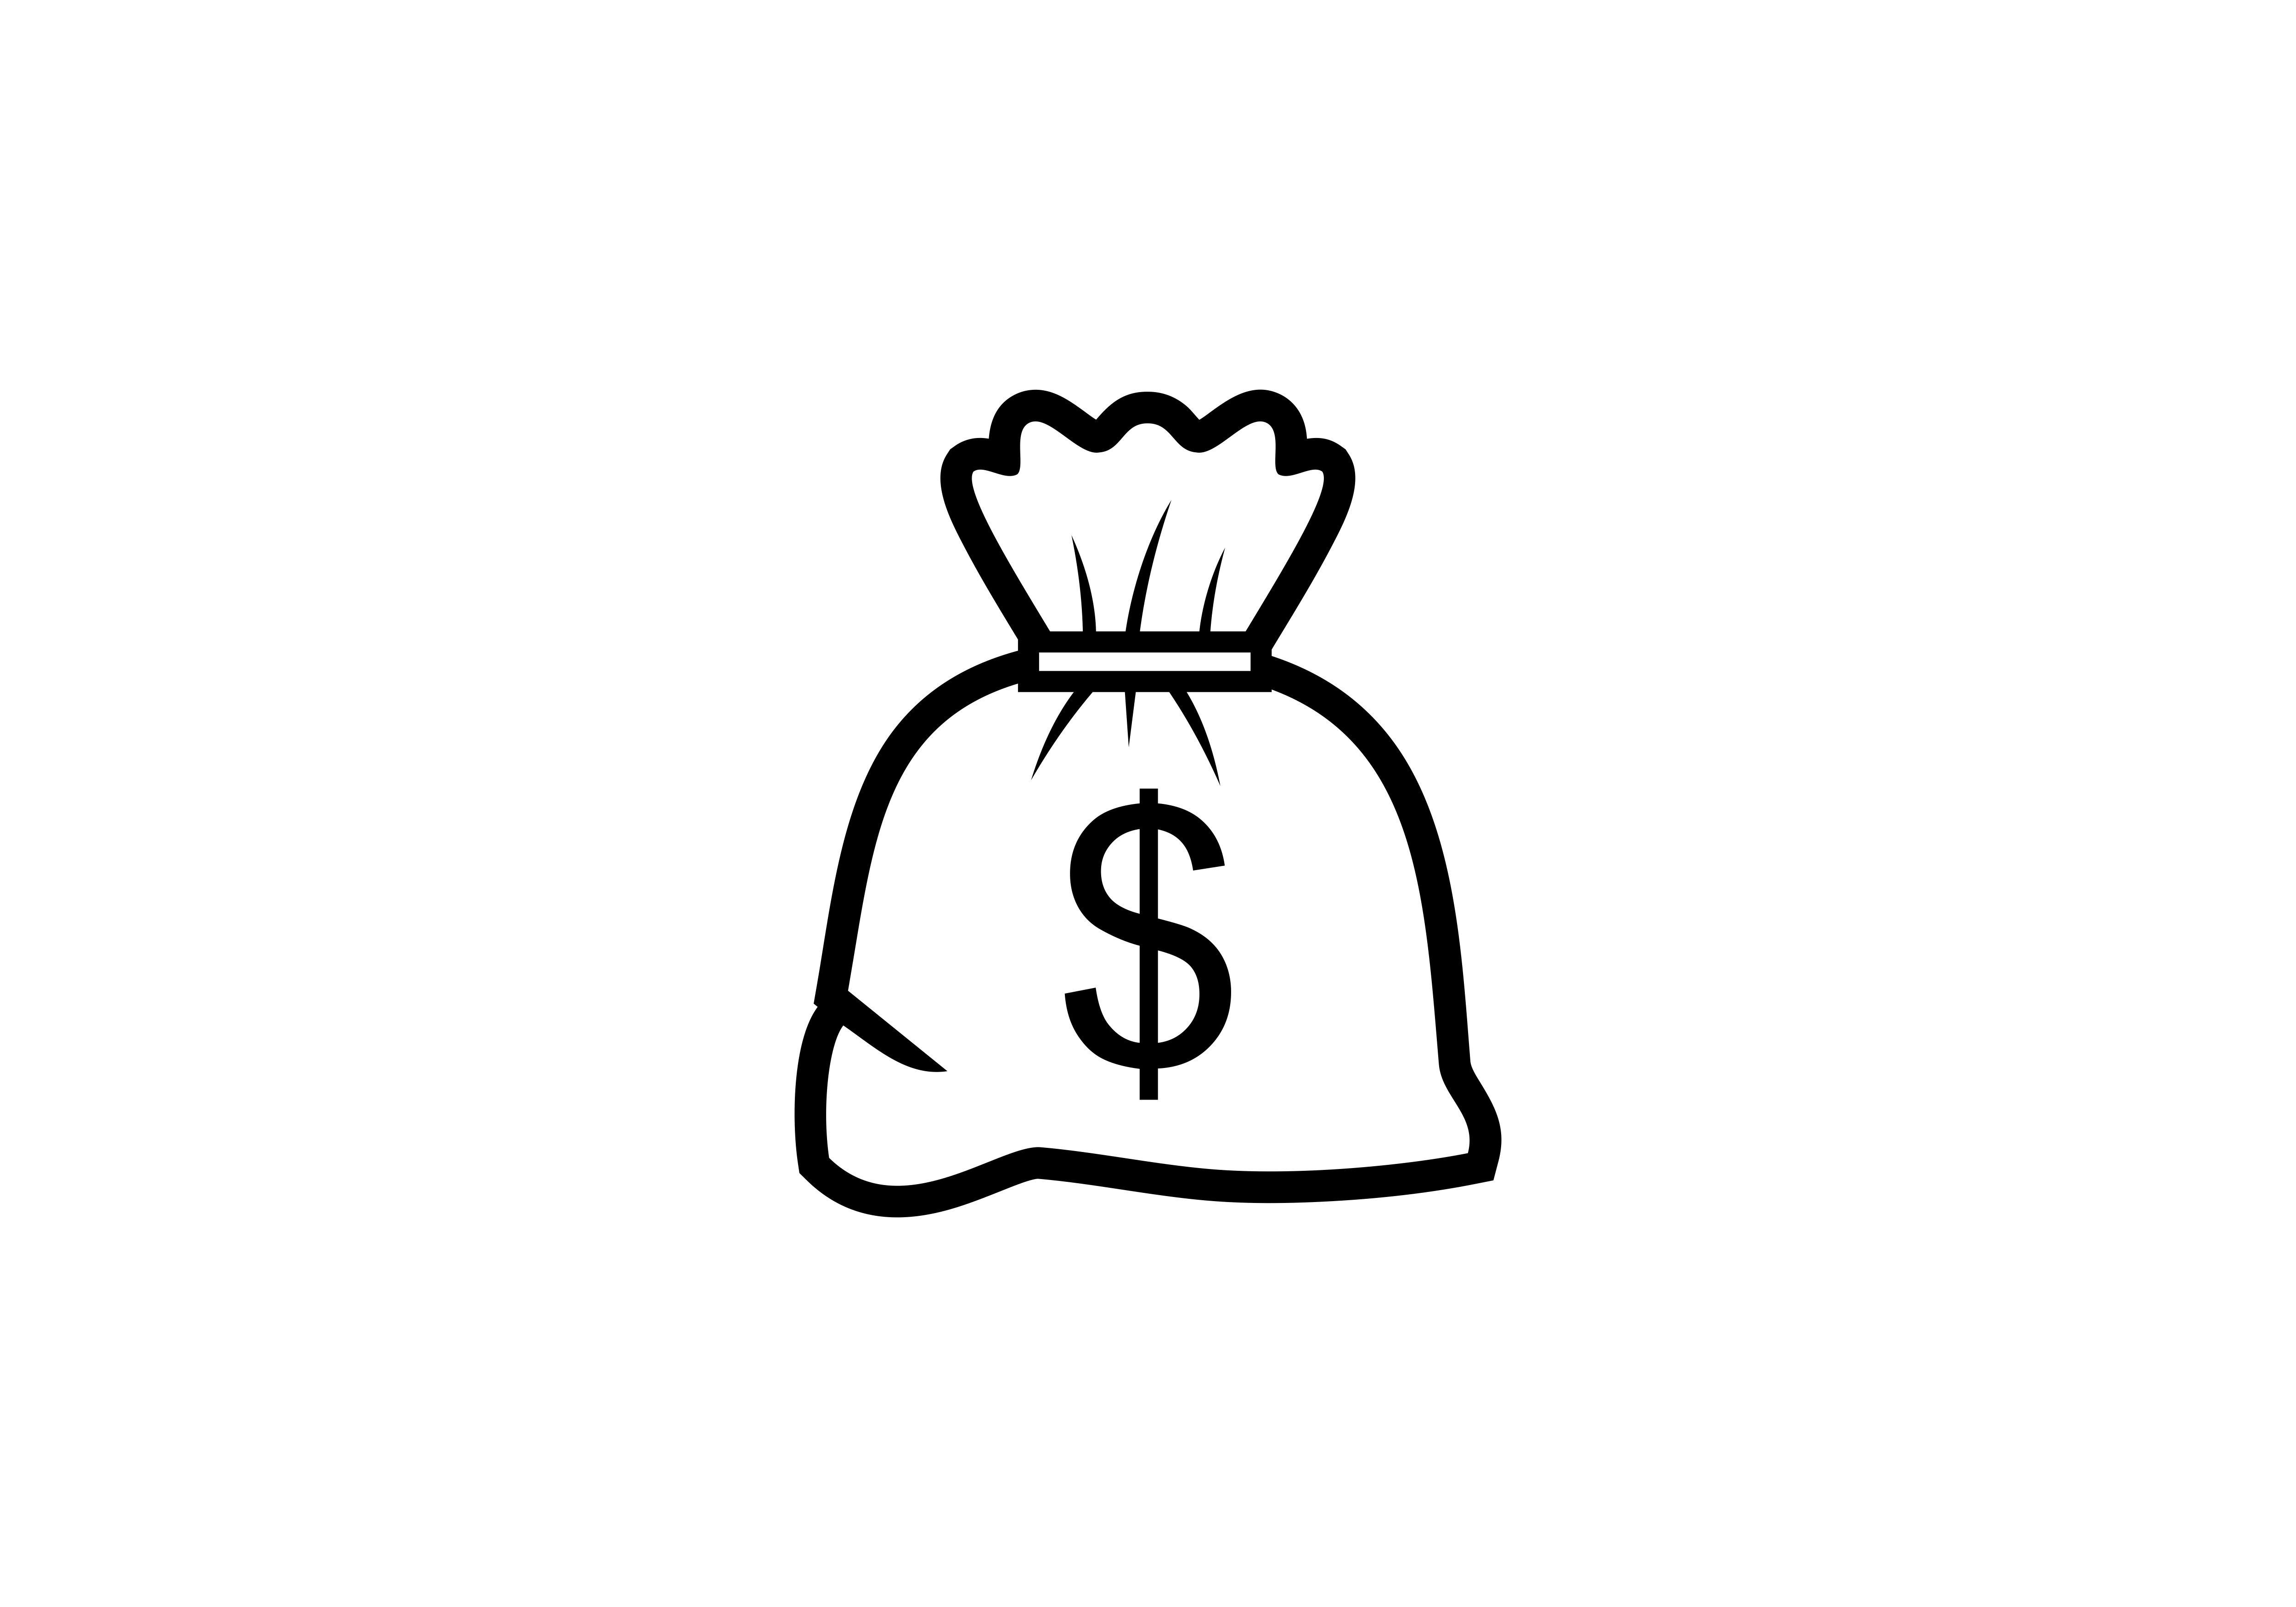 Moeny Logo - Money bag logo